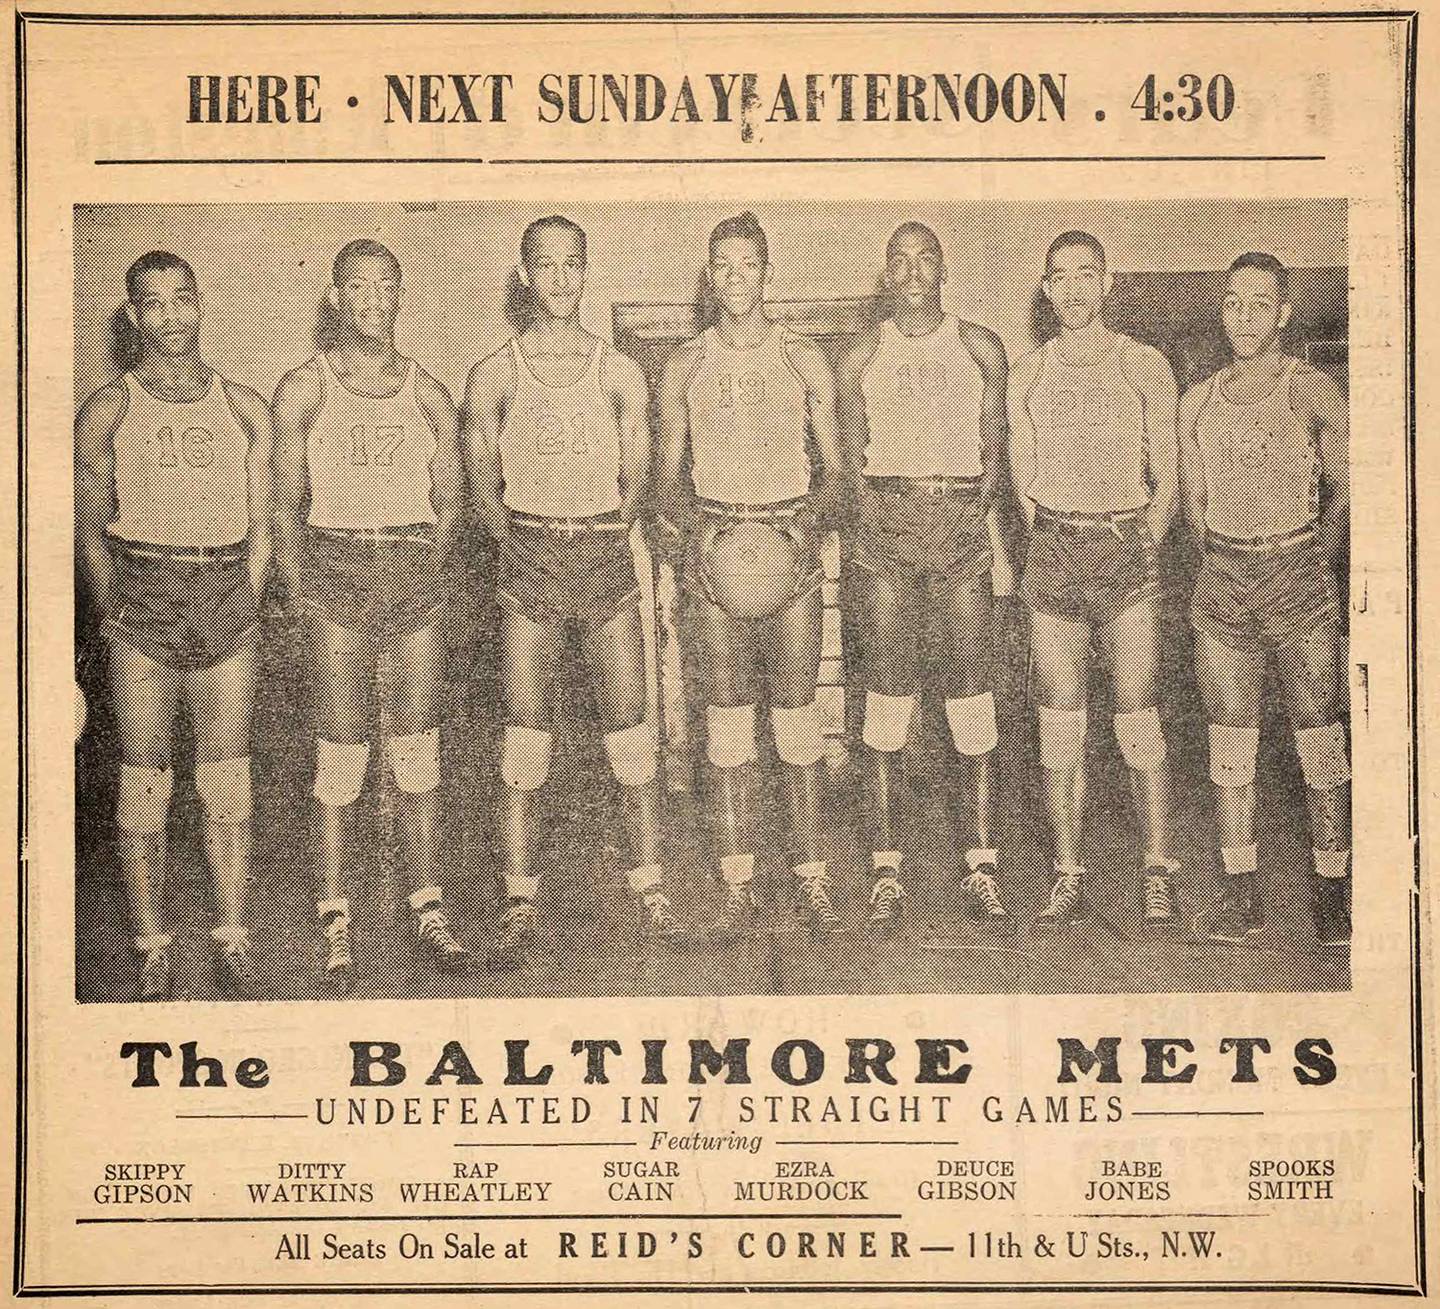 The Baltimore Mets team photo included: Skippy Gipson, Ditty Watkins, Rap Wheatley, Sugar Cain, Ezar Murdock, Duce Gibson, Babe Jones and Spooky Smith.